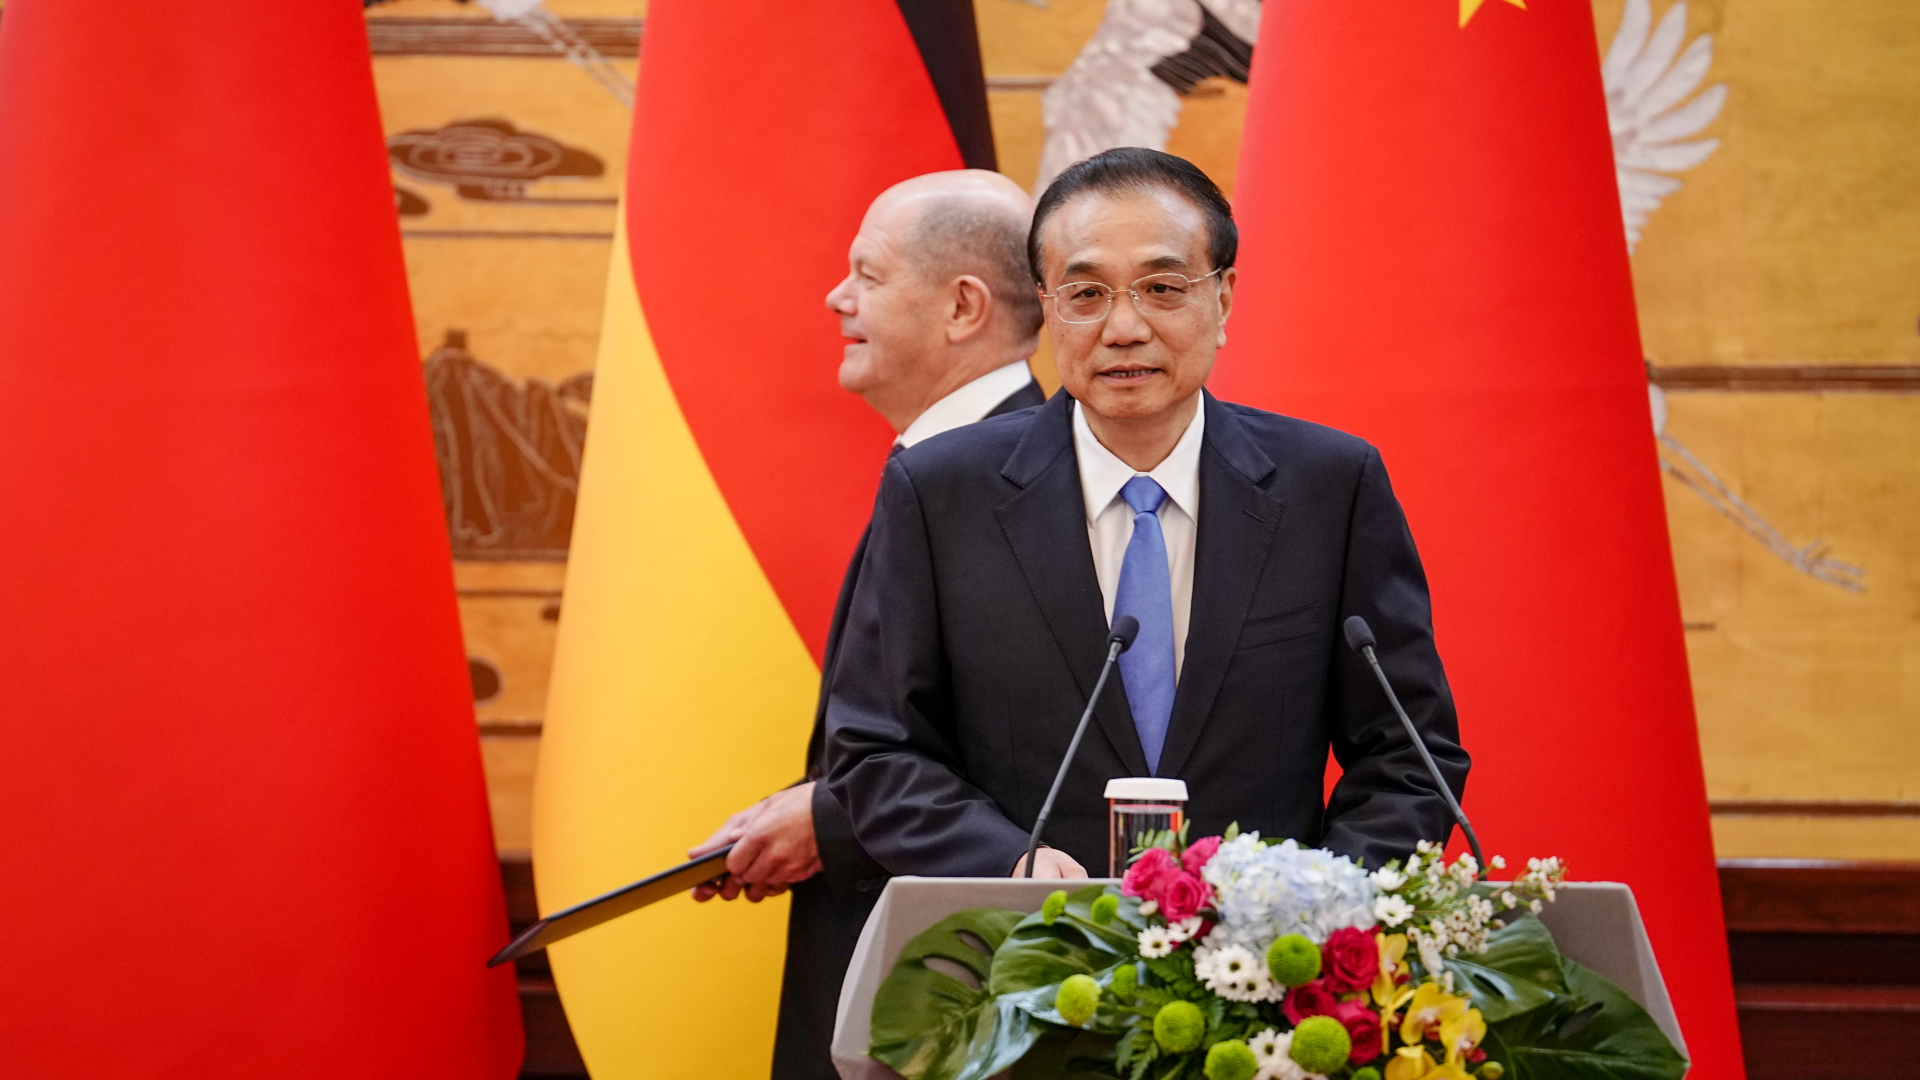 Bundeskanzler Scholz in China mit Ministerpräsident Li Keqiang | dpa